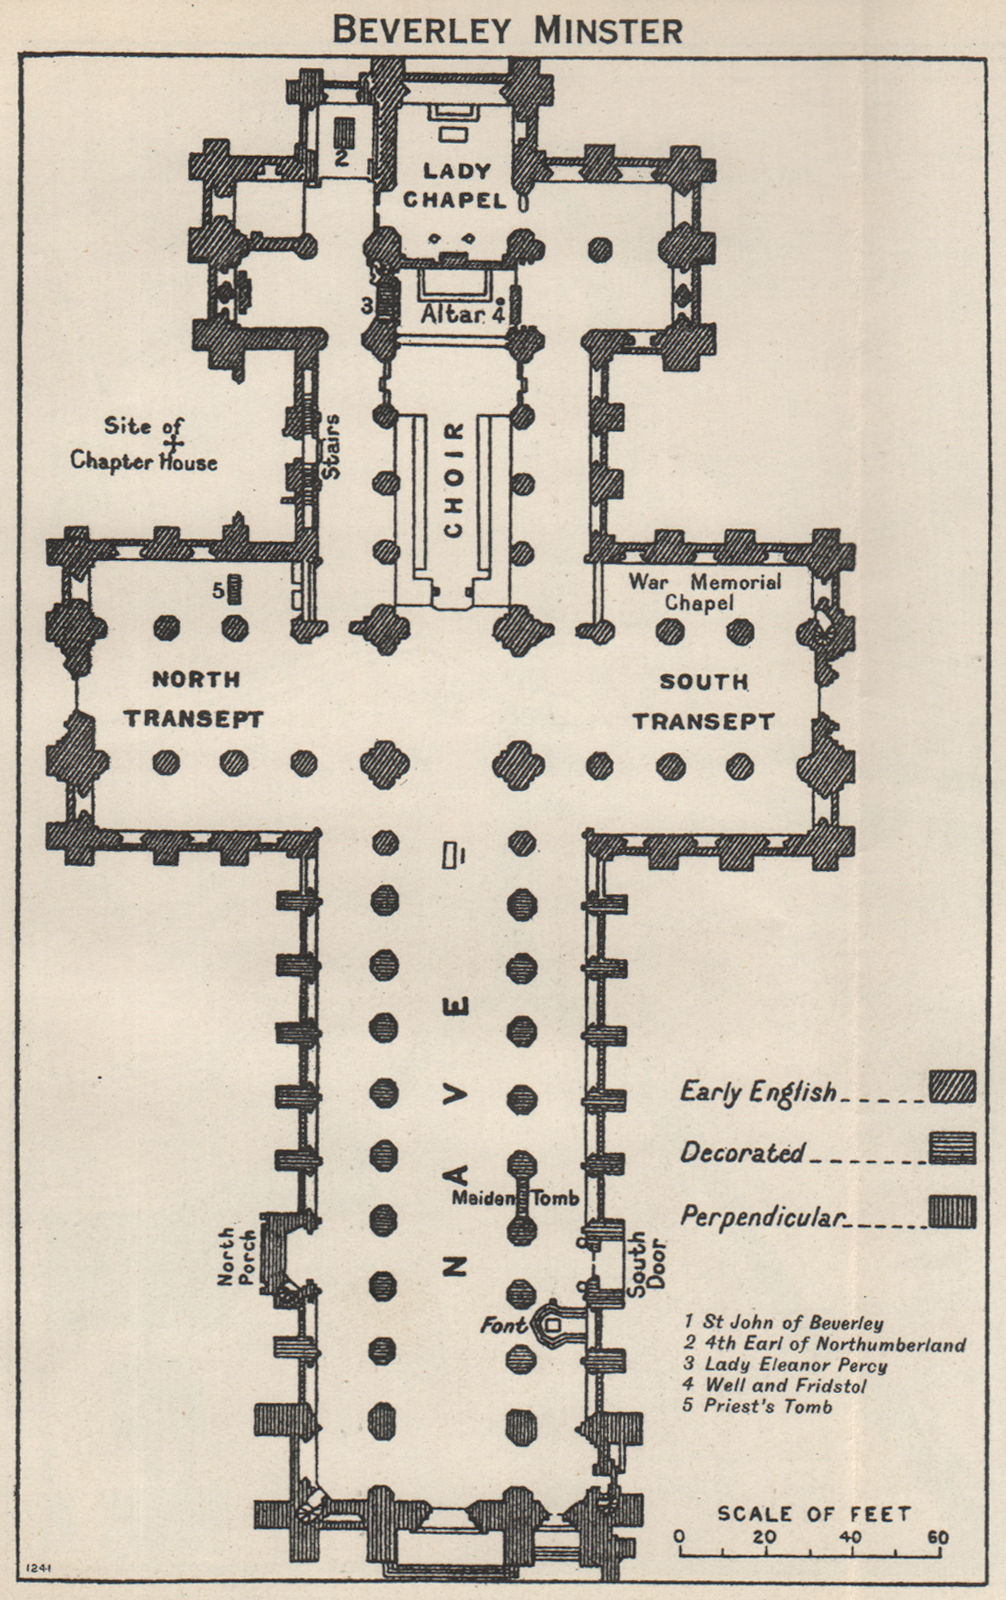 Associate Product Beverley Minster floor plan. Yorkshire 1957 old vintage map chart